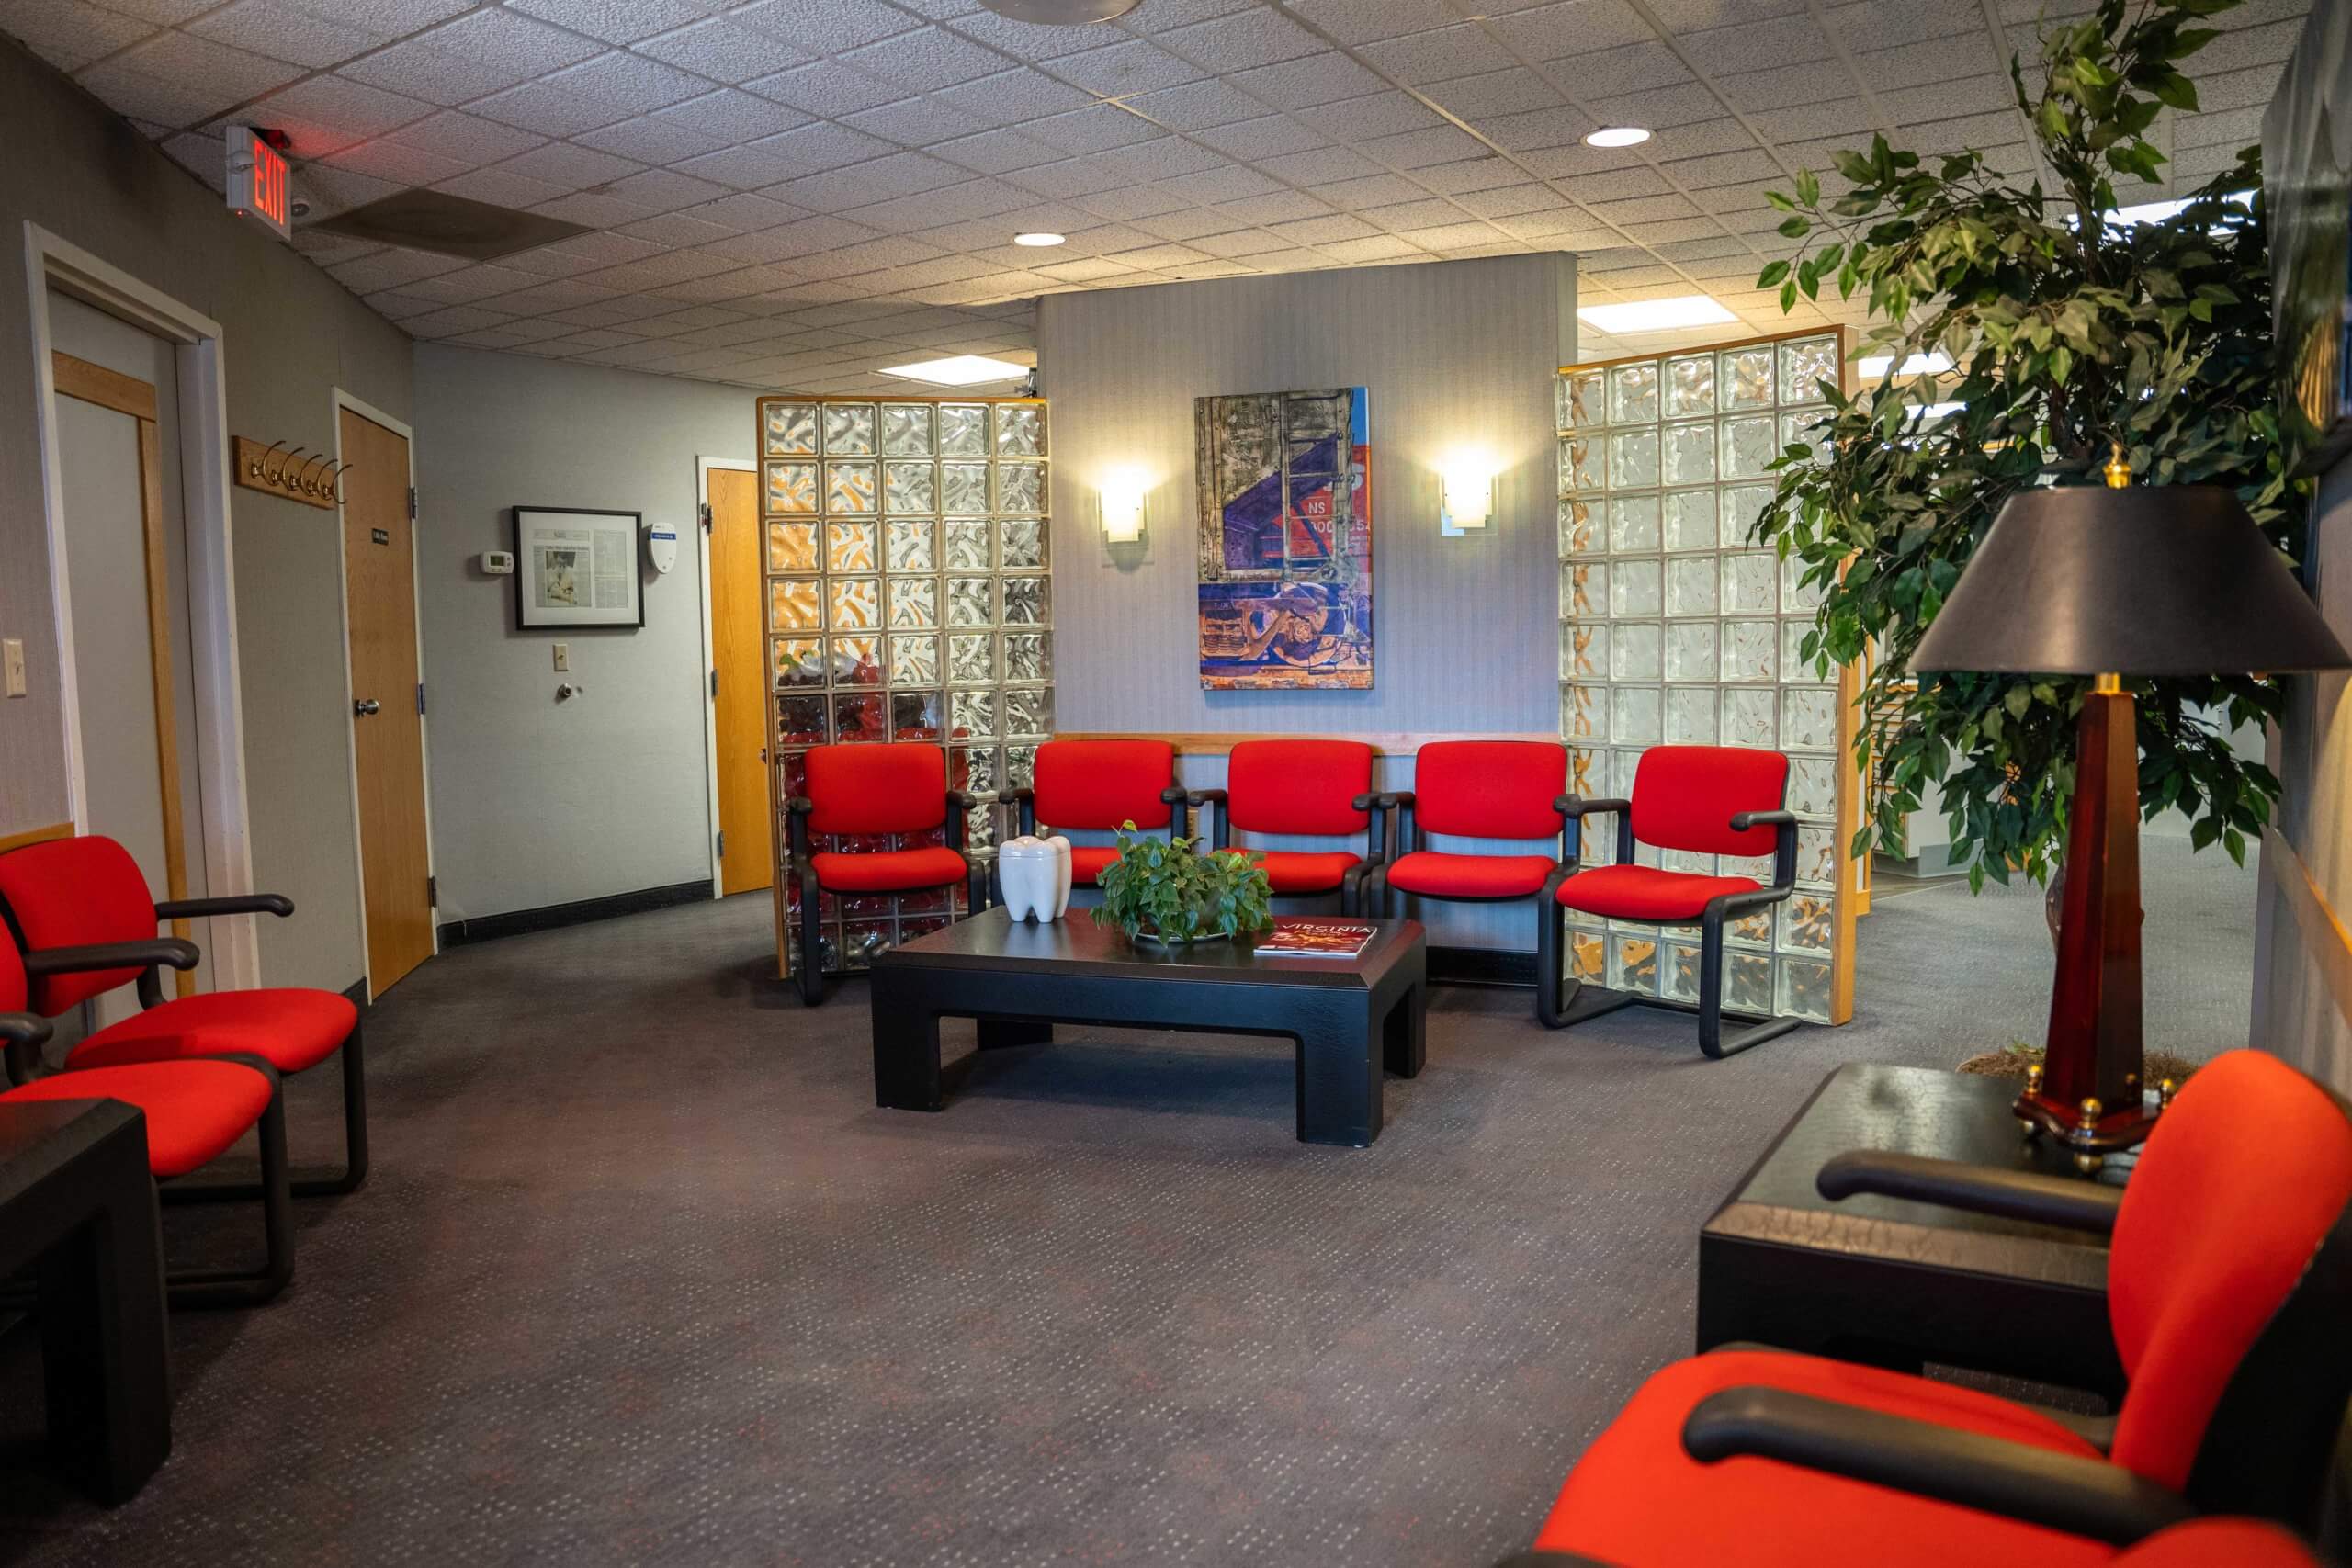 Interior of Garrison Family Dentistry office